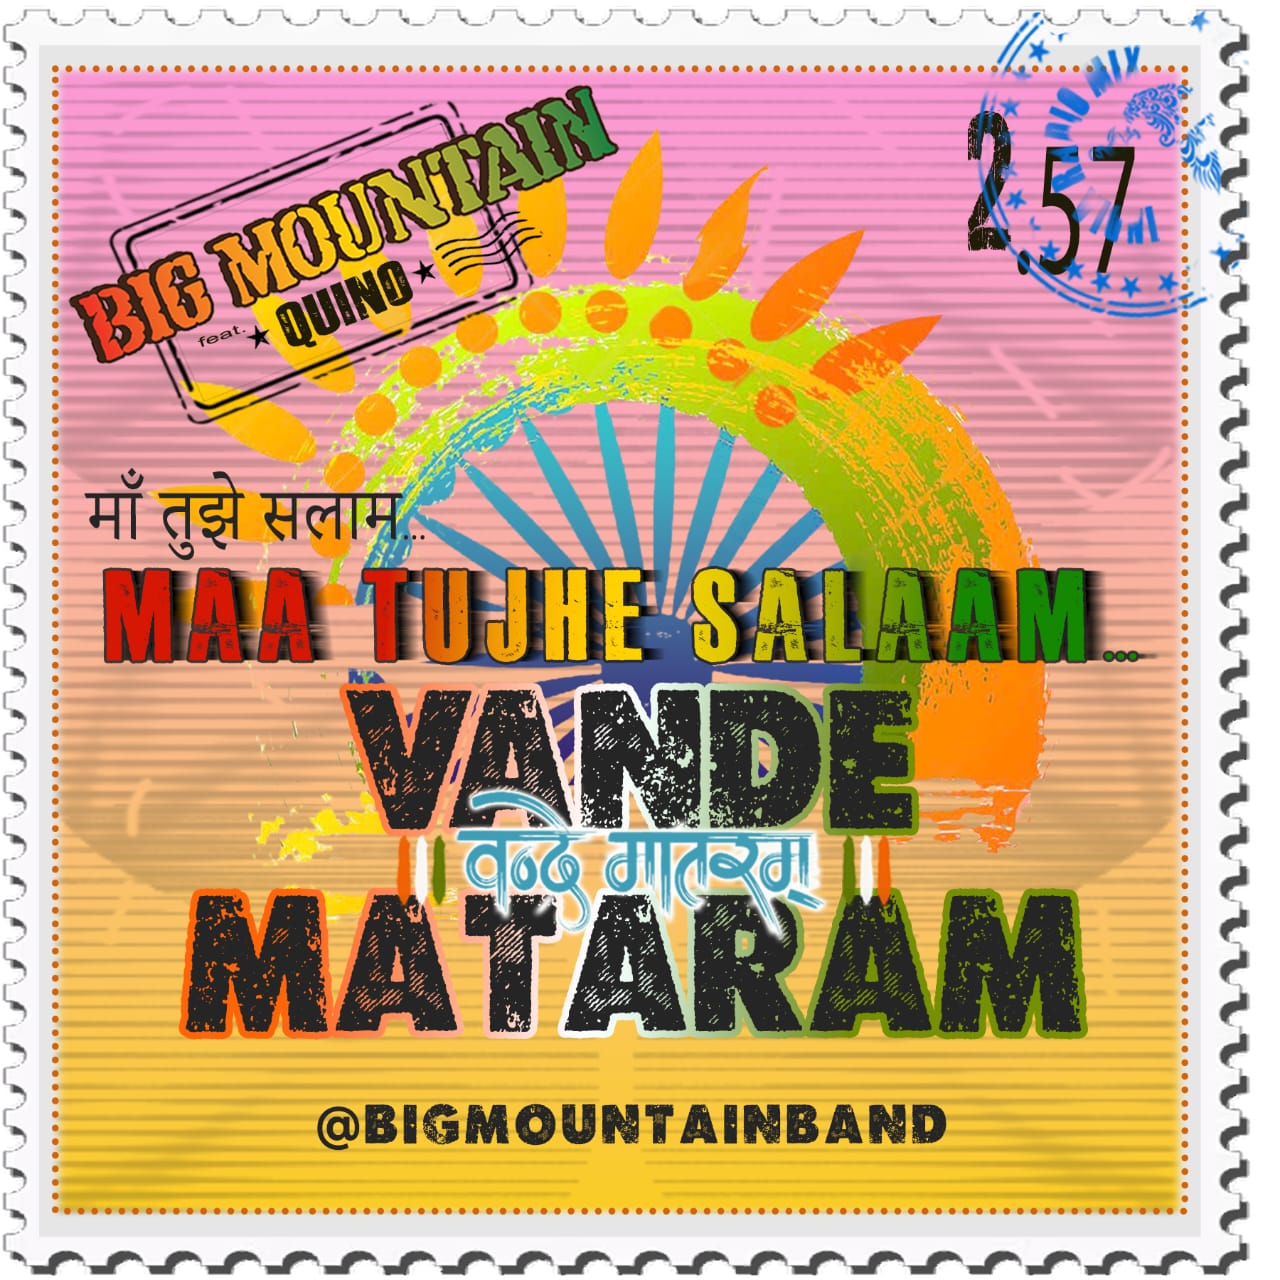 Legendary Reggae Band Big Mountain’s latest Vande Mataram — Maa Tujhe Salaam pays tribute to India.